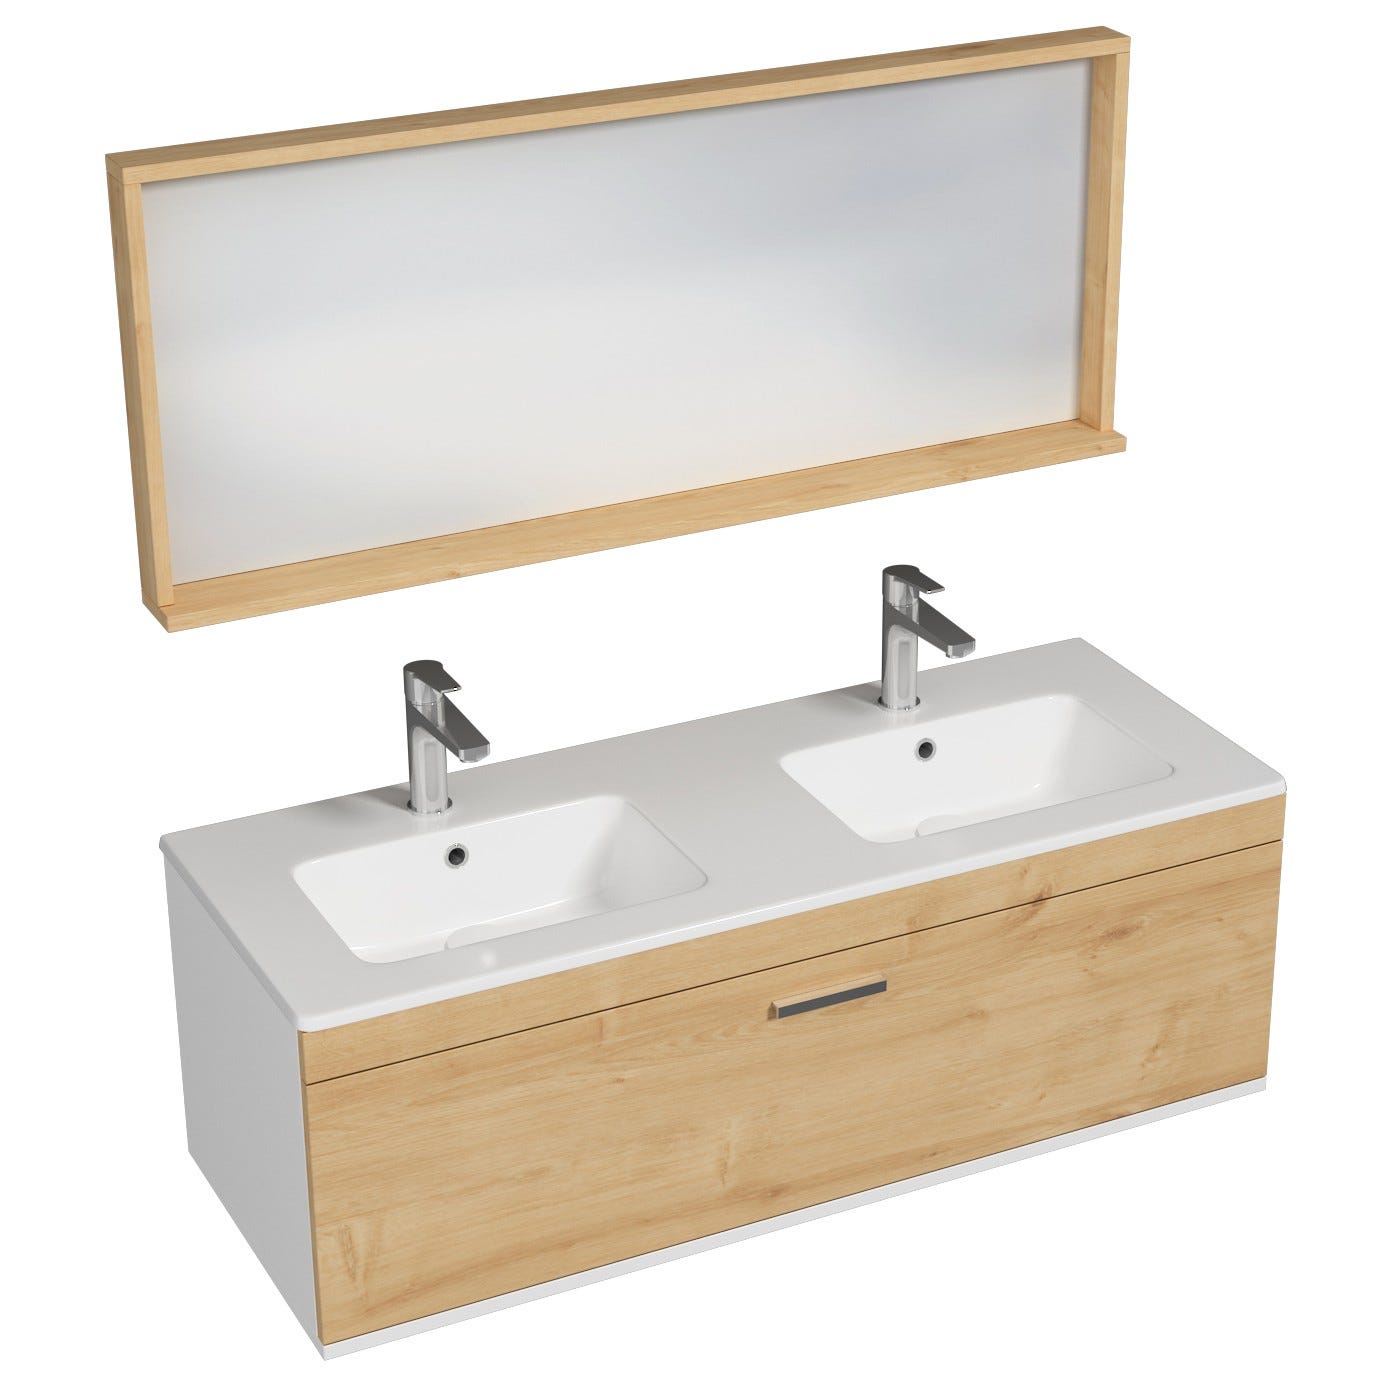 RUBITE Meuble salle de bain double vasque 1 tiroir chêne clair largeur 120 cm + miroir cadre 0